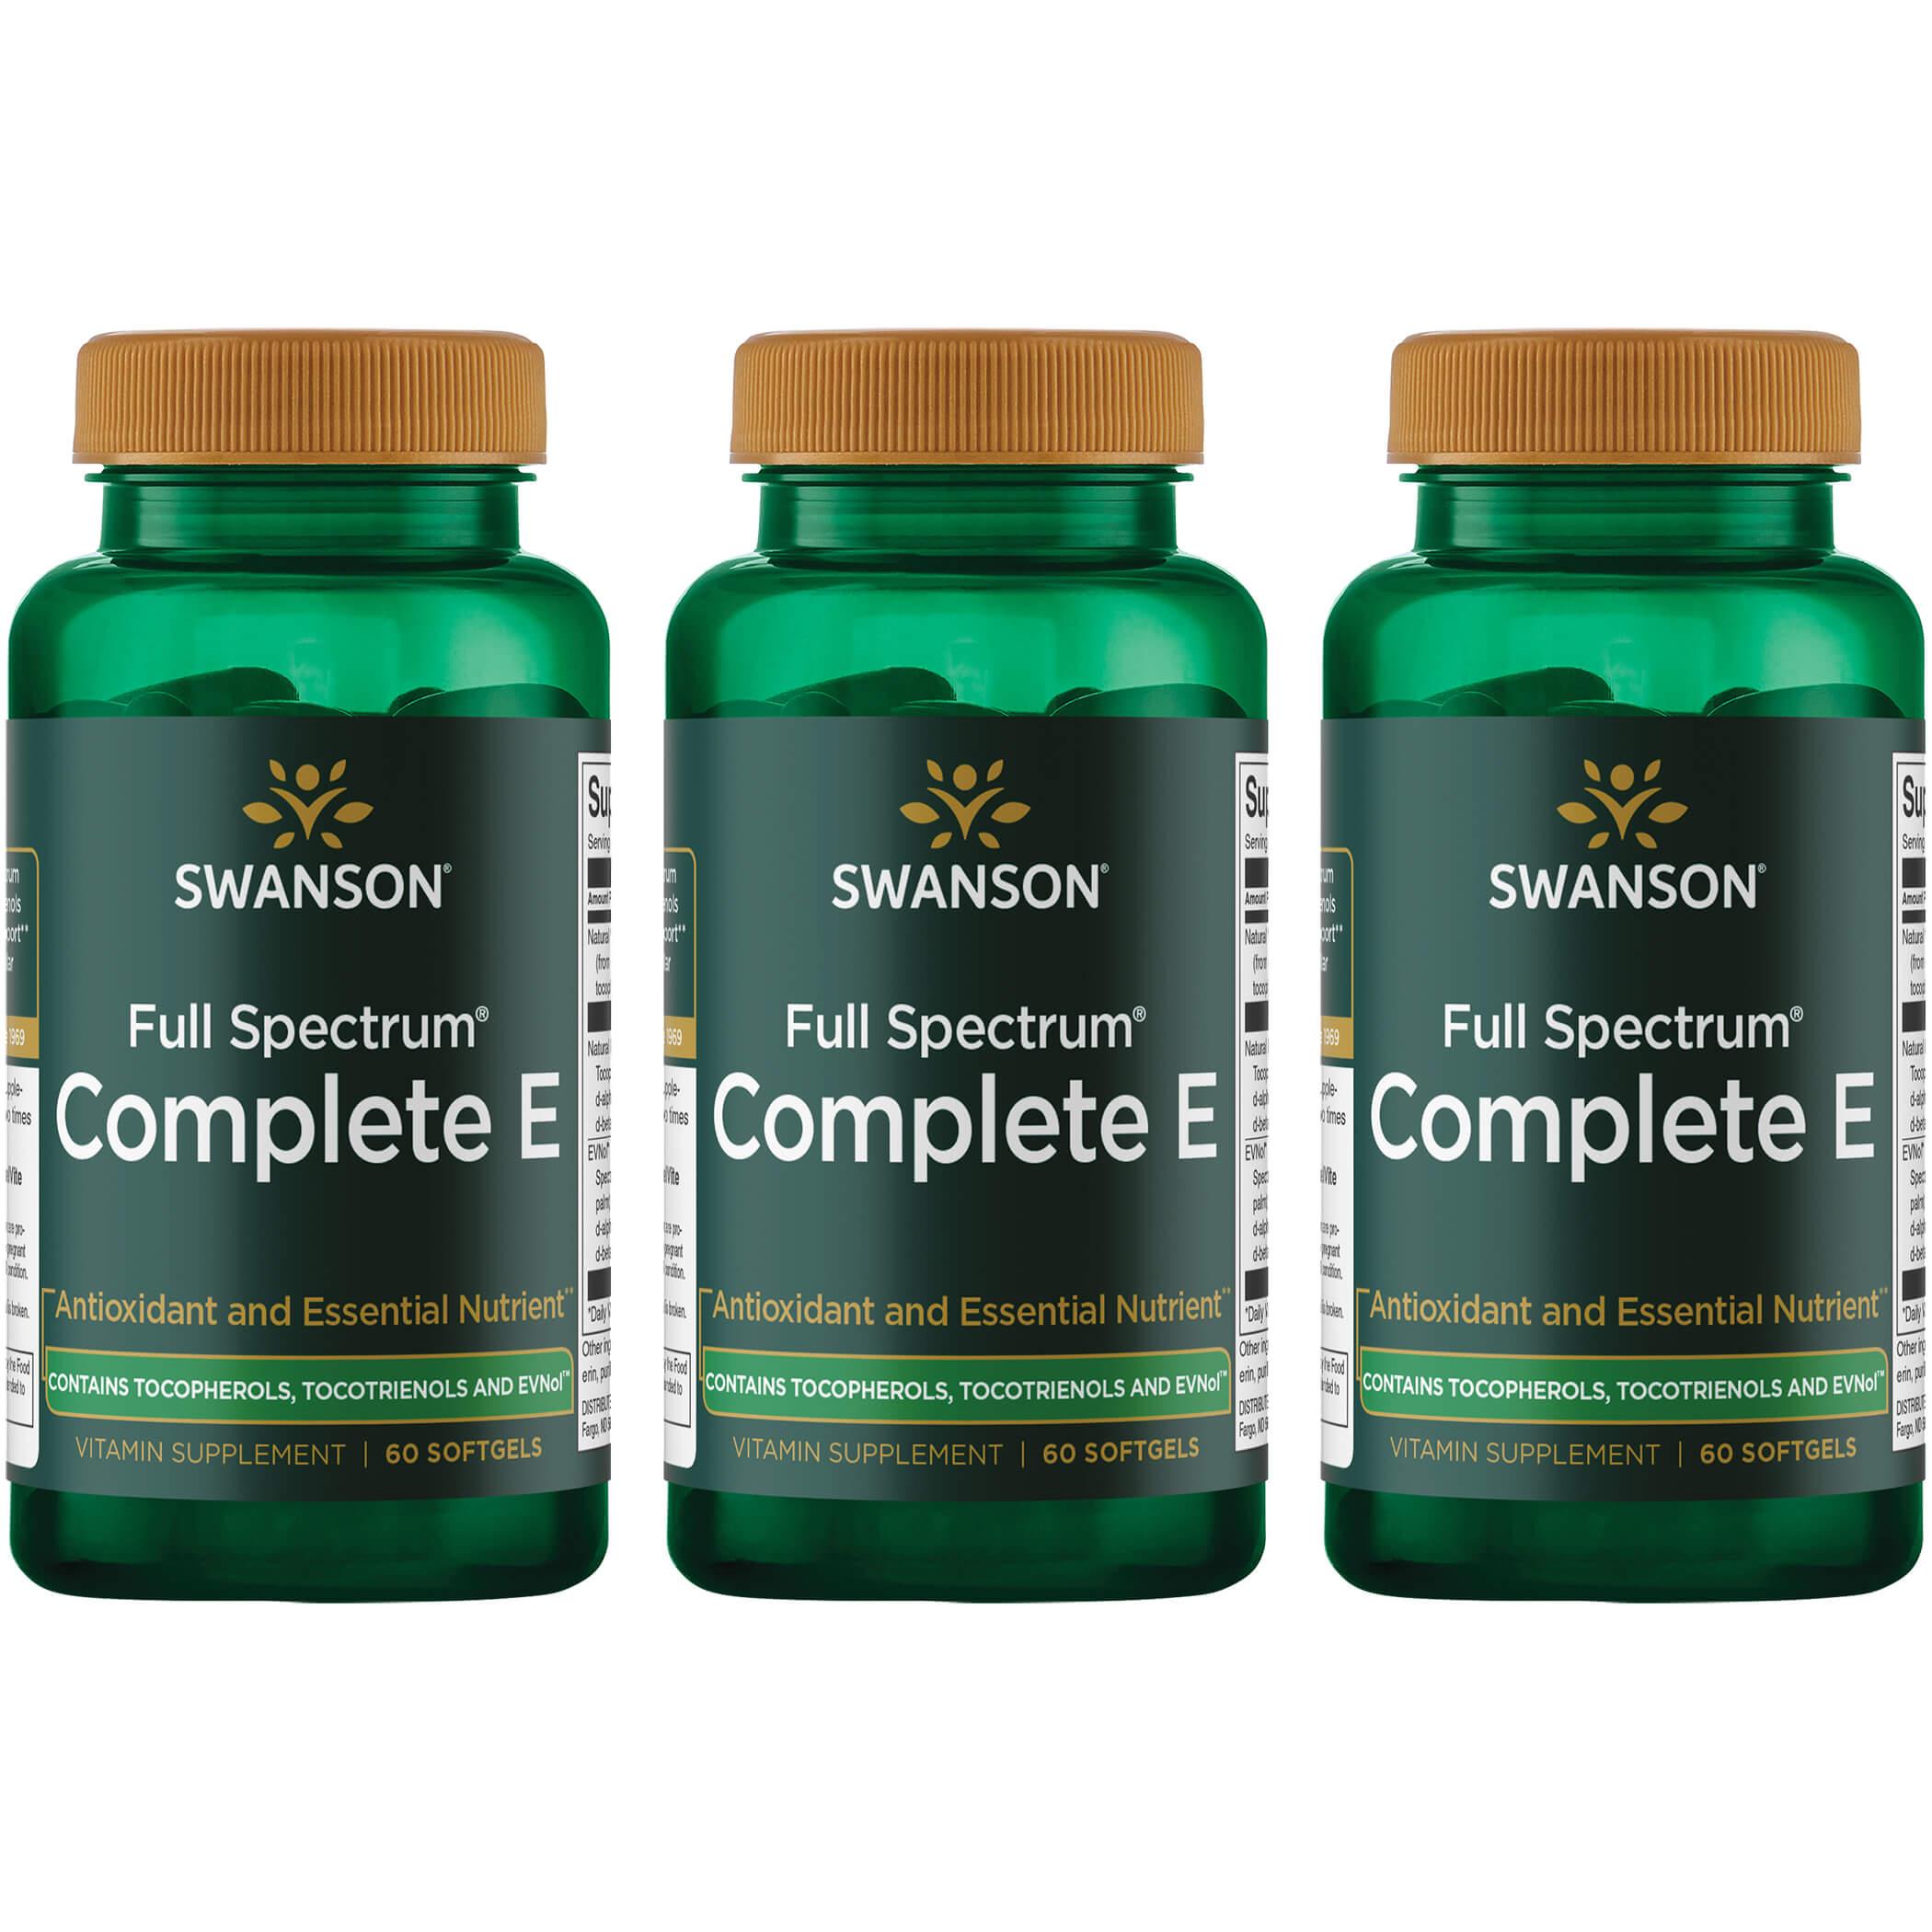 Swanson Ultra Full Spectrum Complete E Contain Tocopherols, Tocotrienols & Envol 3 Pack Vitamin 60 Soft Gels Vitamin E